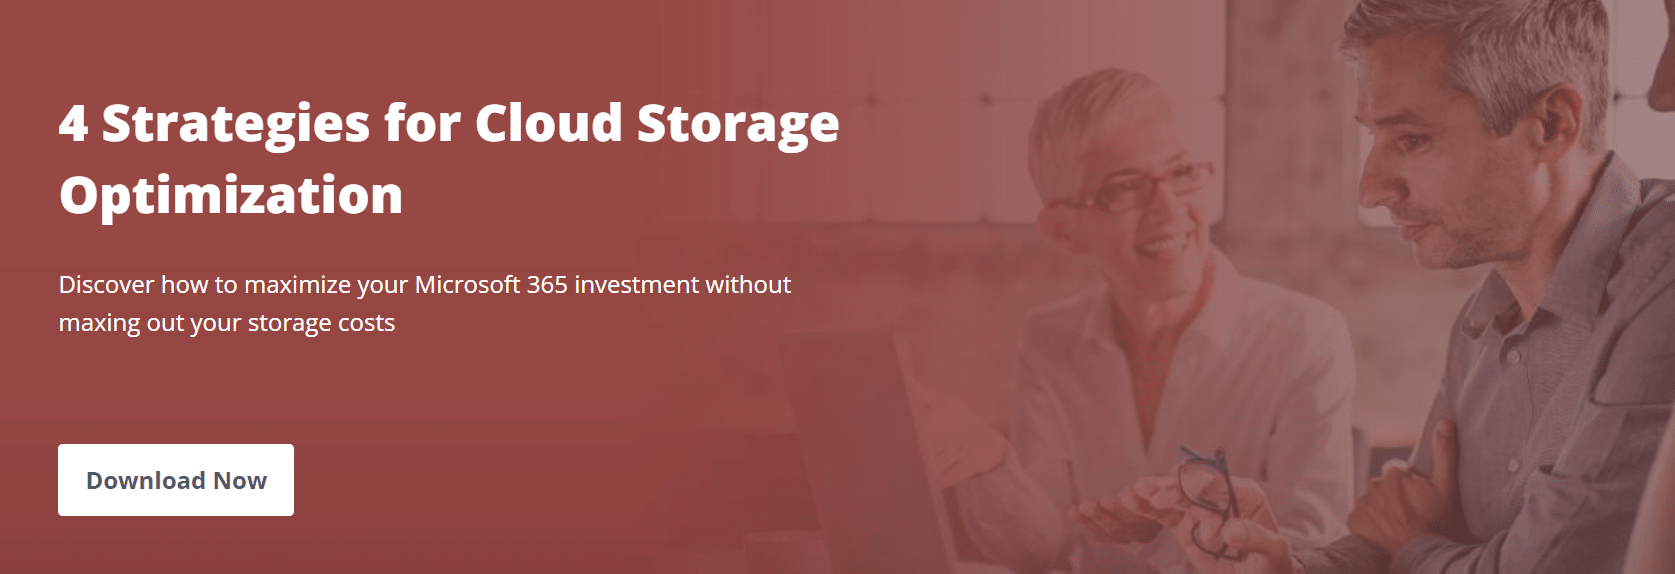 optimize-cloud-storage-with-information-managememt